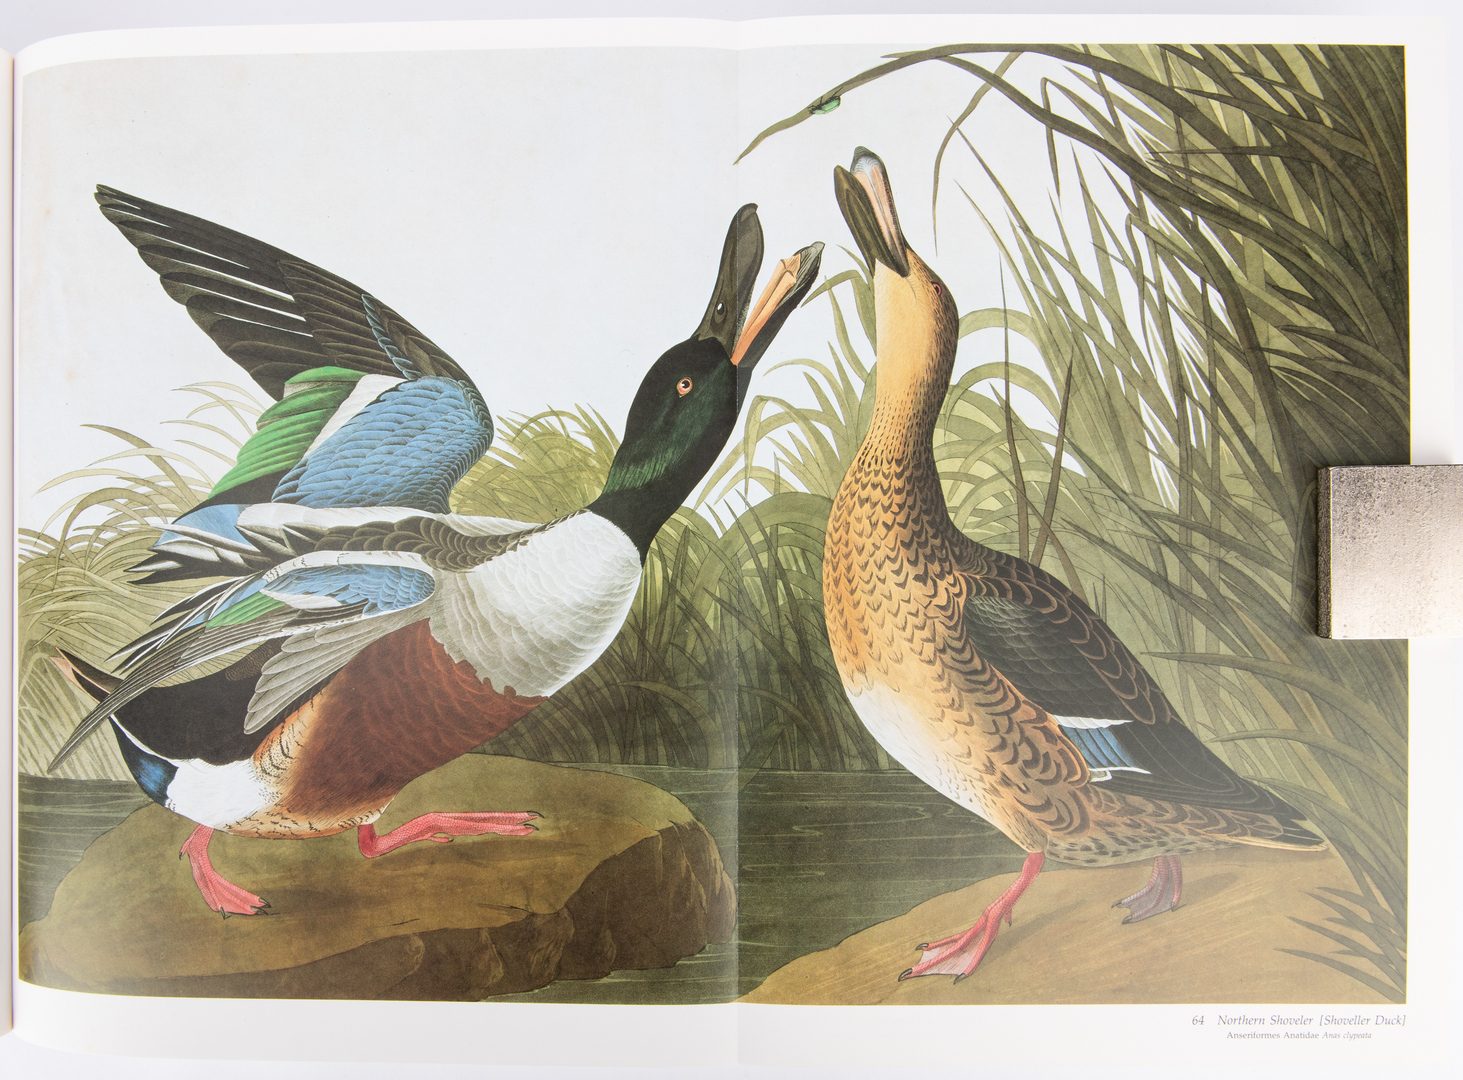 Lot 99: R. T. Peterson, Audubon's Birds of America, 1981